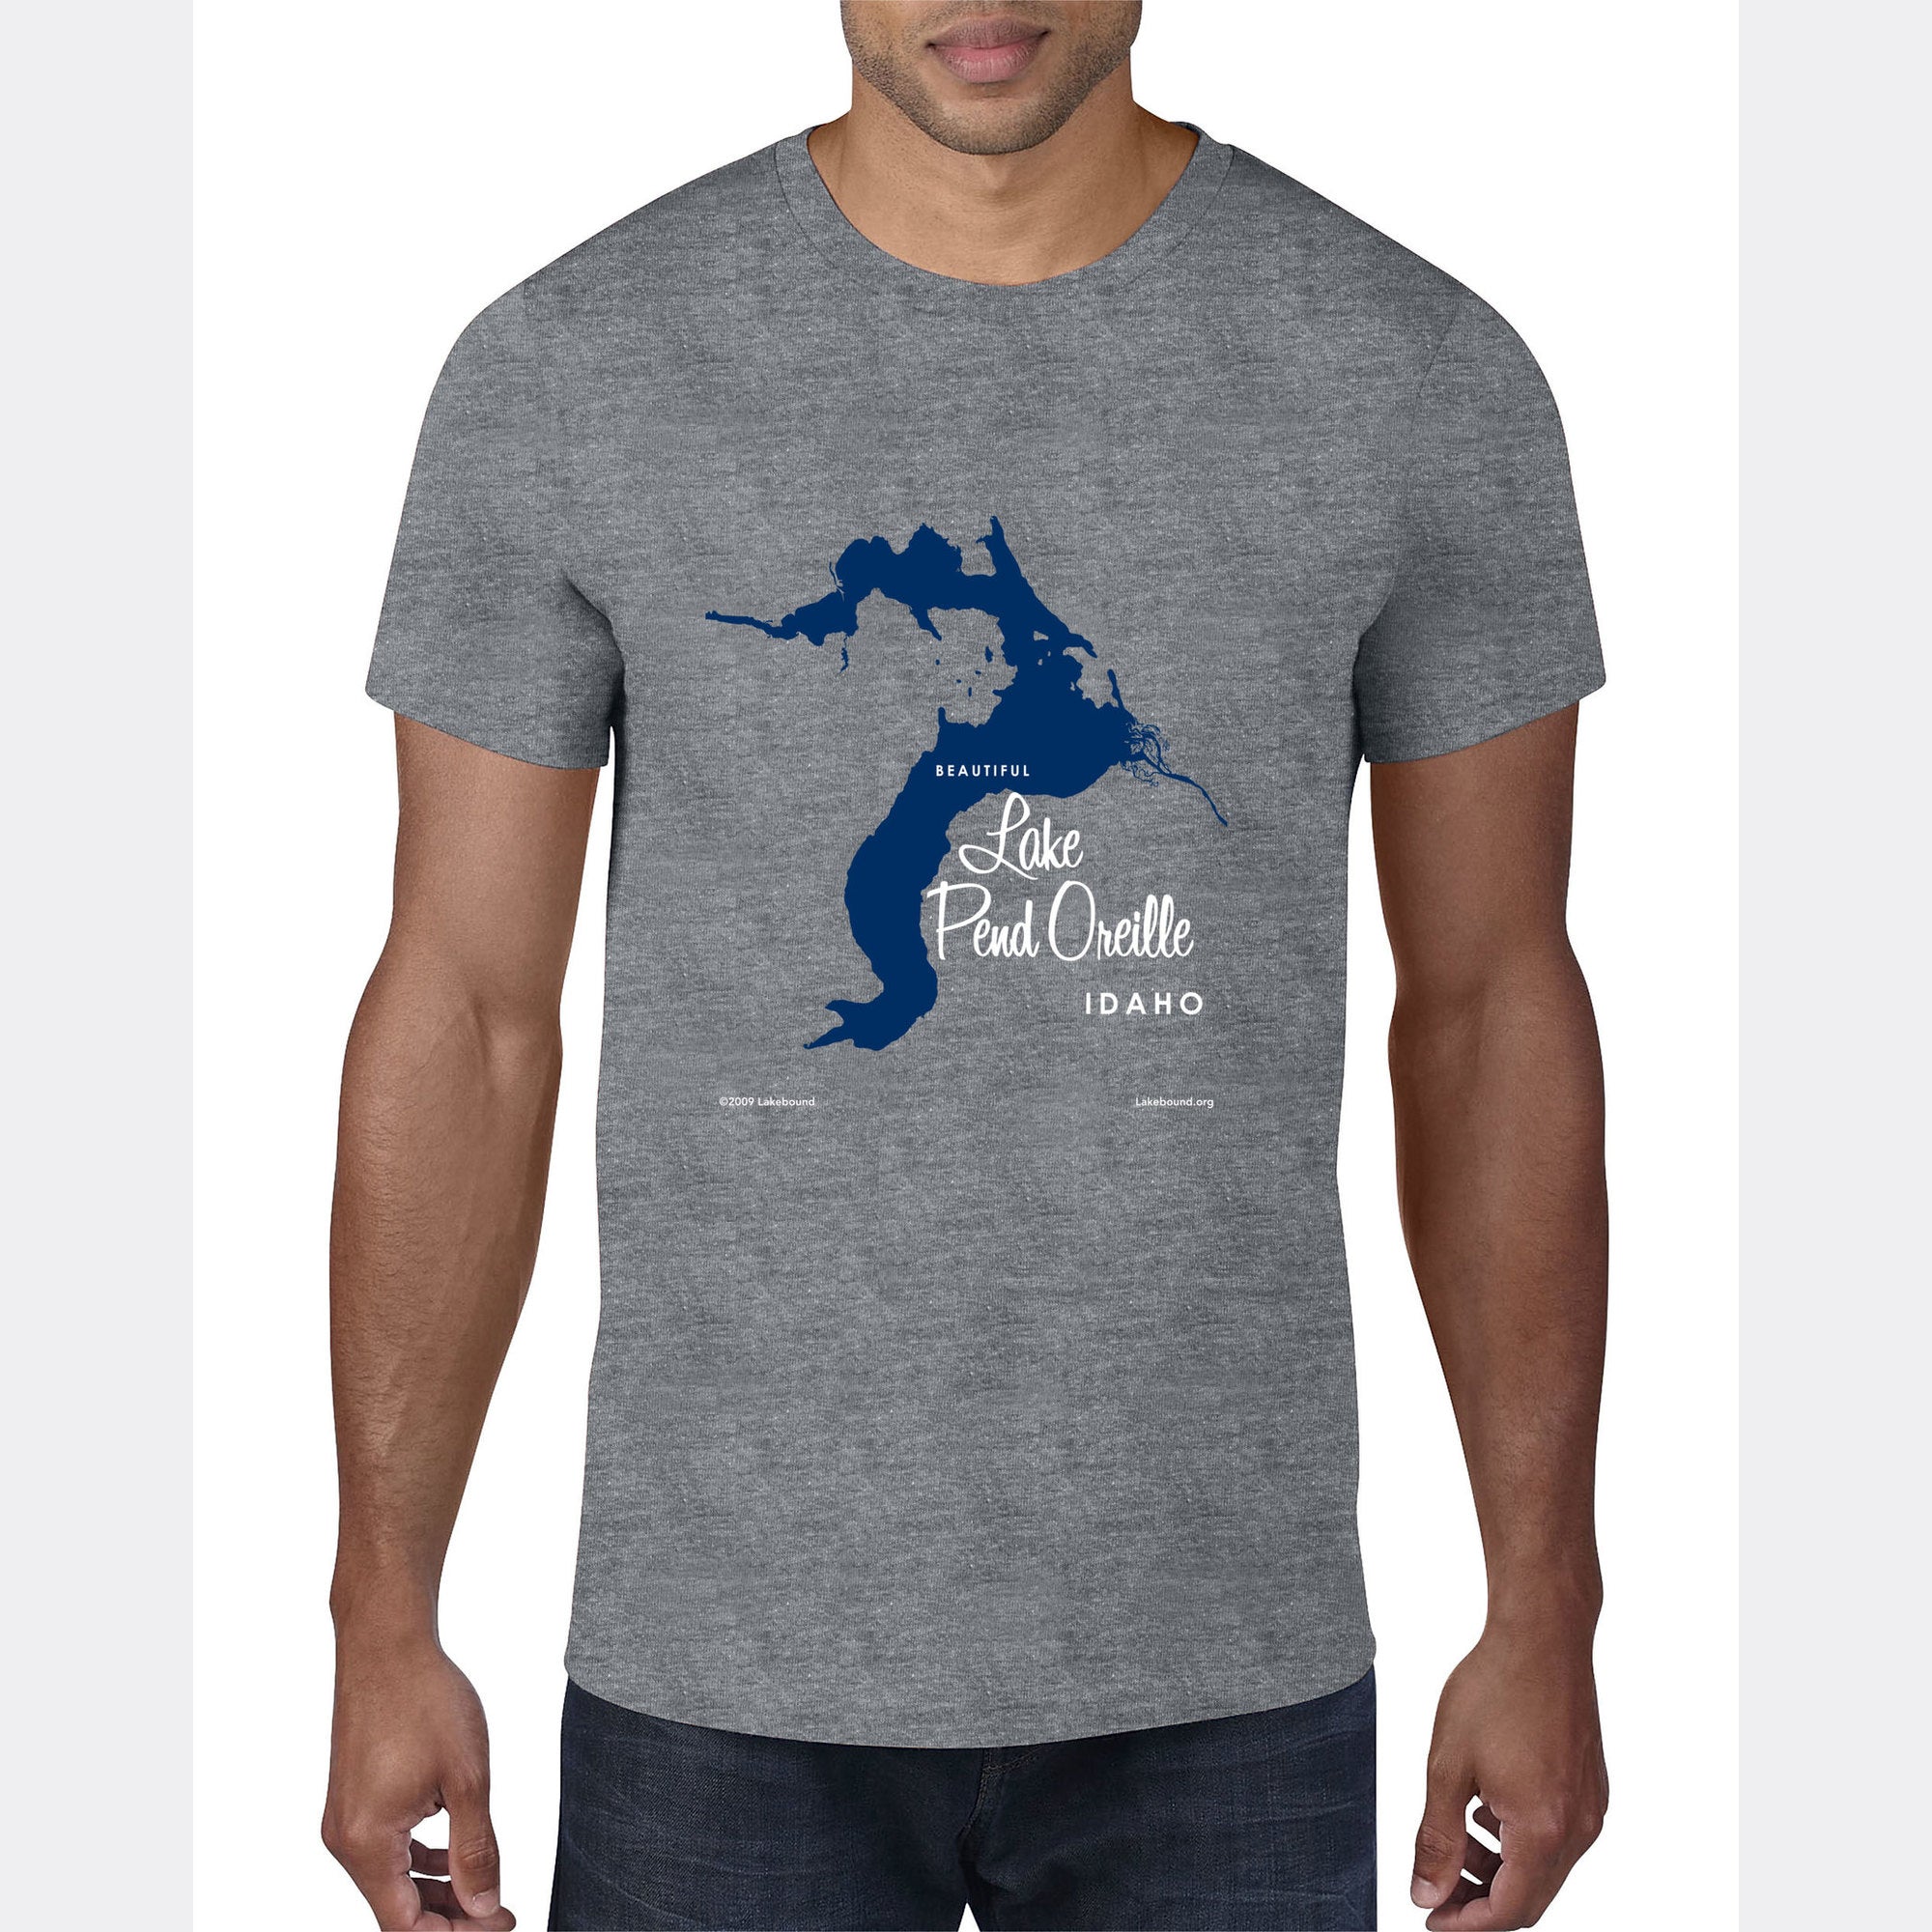 Lake Pend Oreille Idaho, T-Shirt